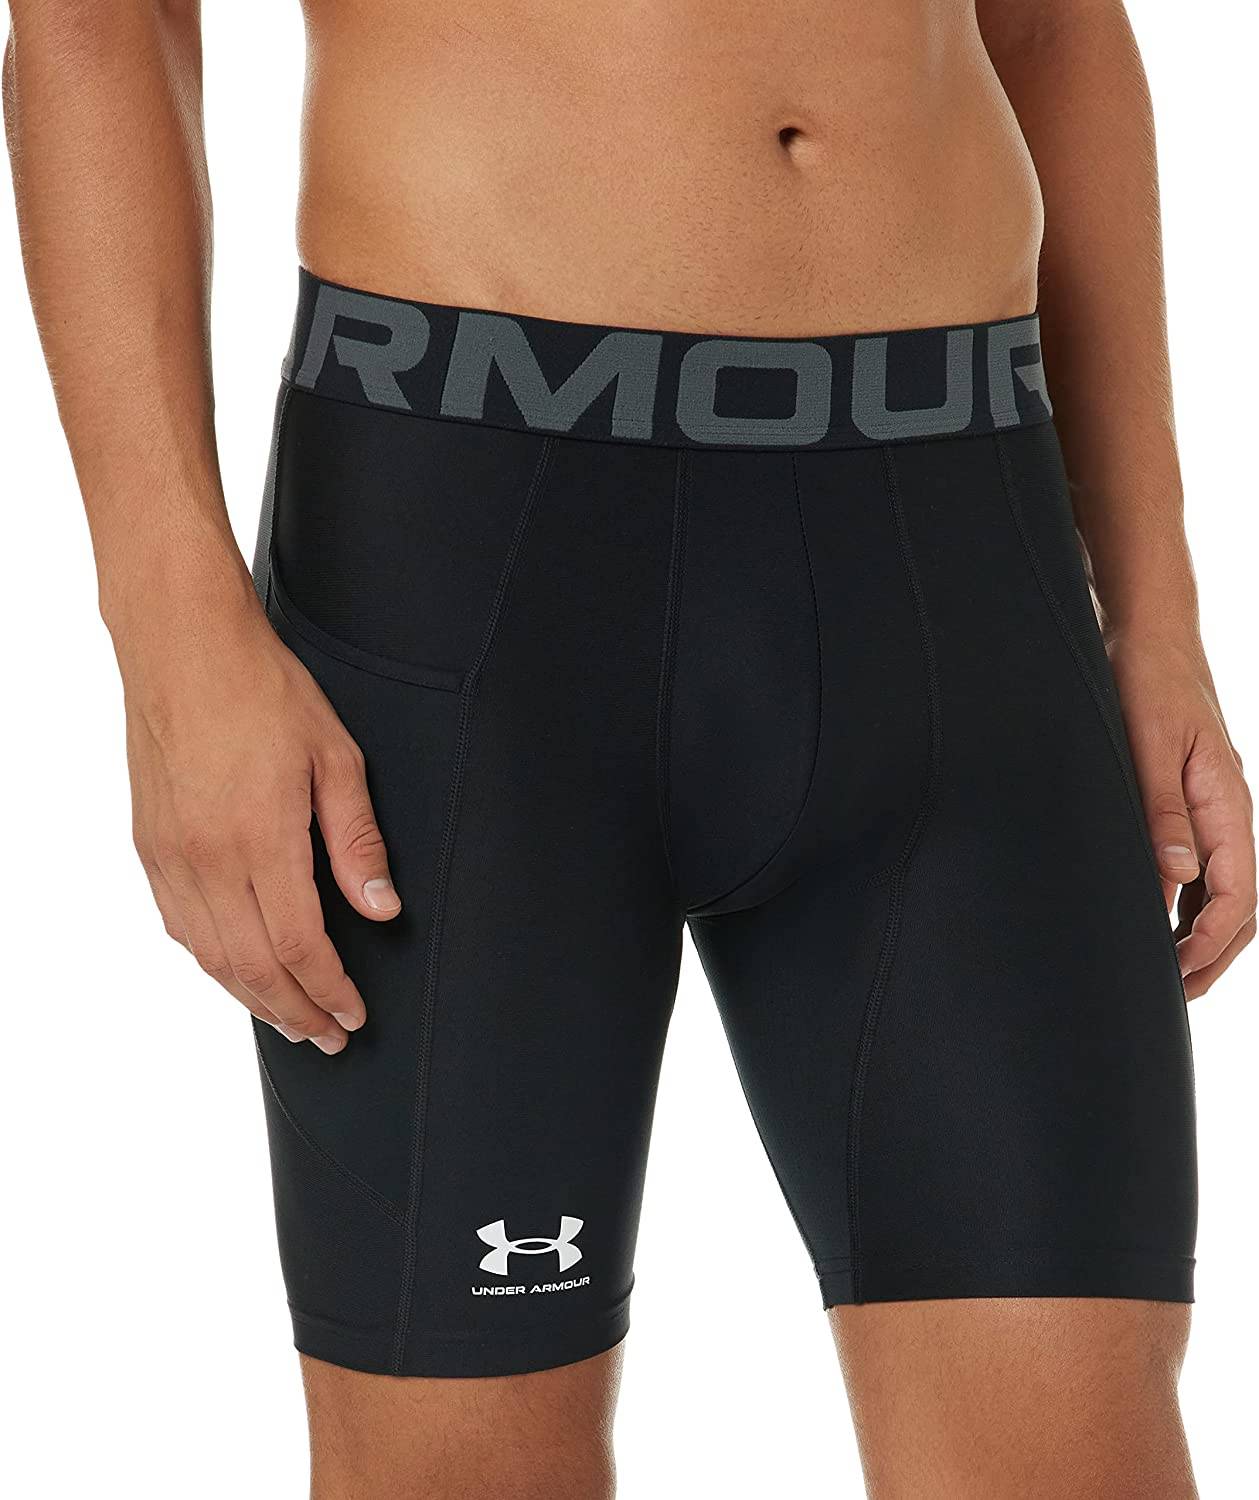 Under Armour Men's HeatGear Compression Shorts